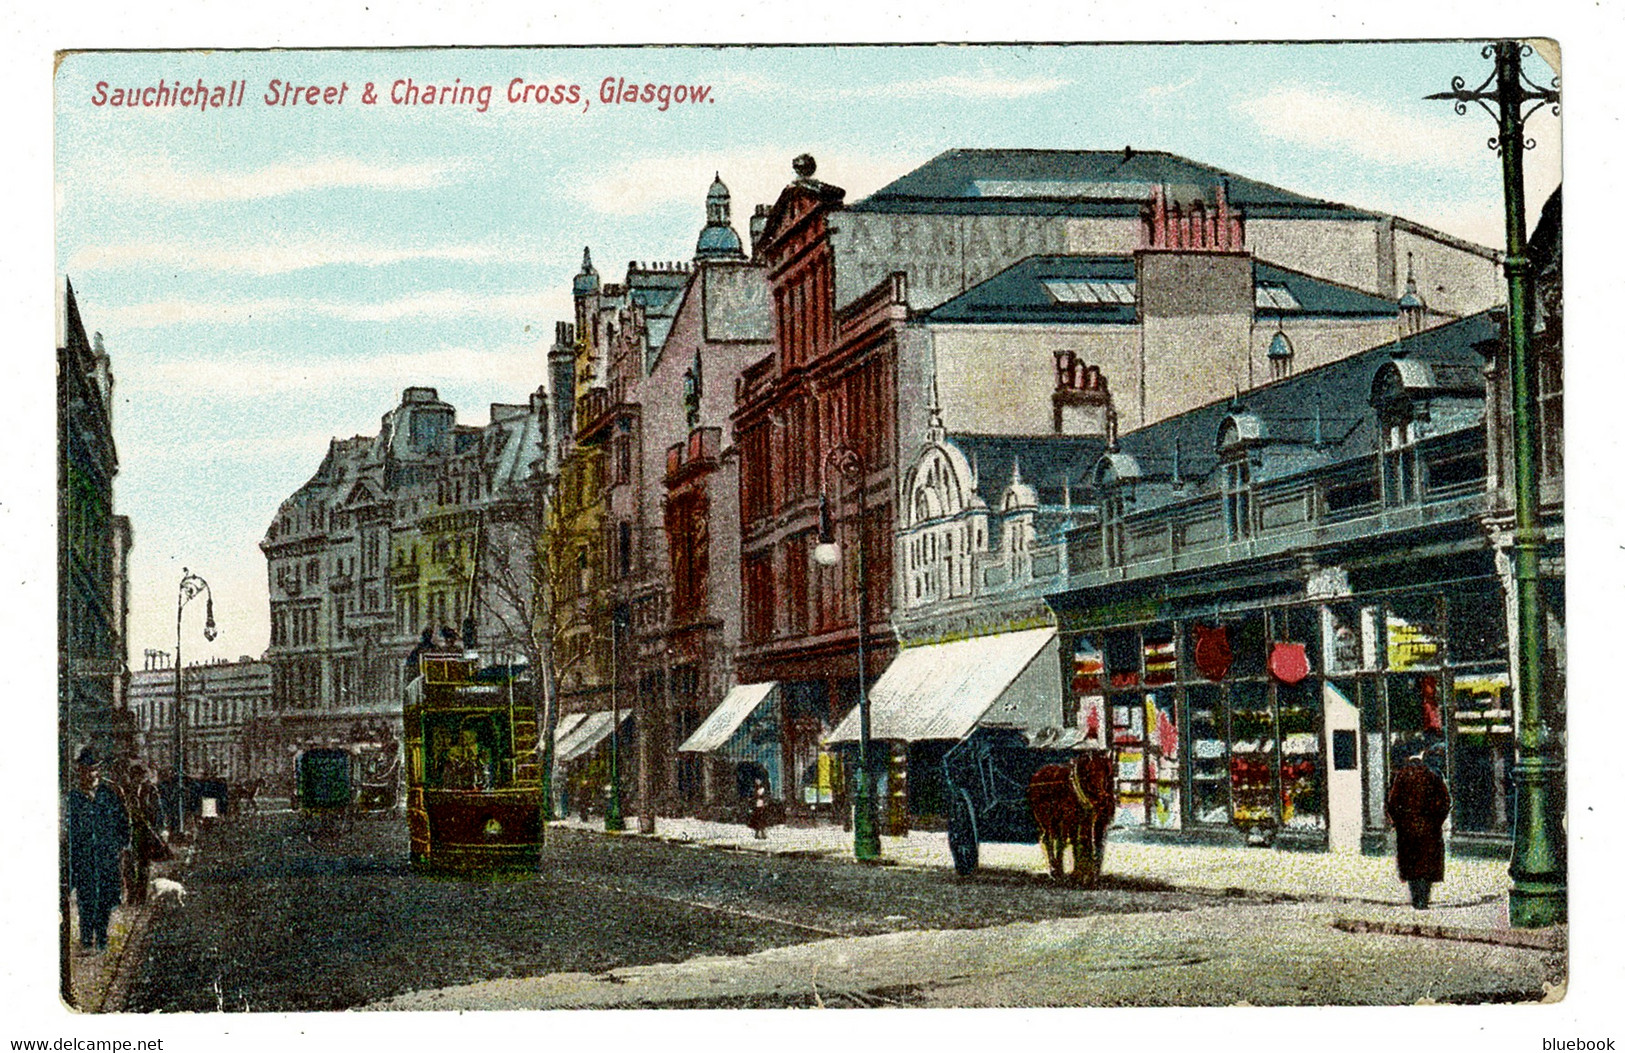 Ref 1473 - 1905 Postcard - Sauchihall Street & Charing Cross Glasgow - Open Top Bus & Shops - Lanarkshire / Glasgow